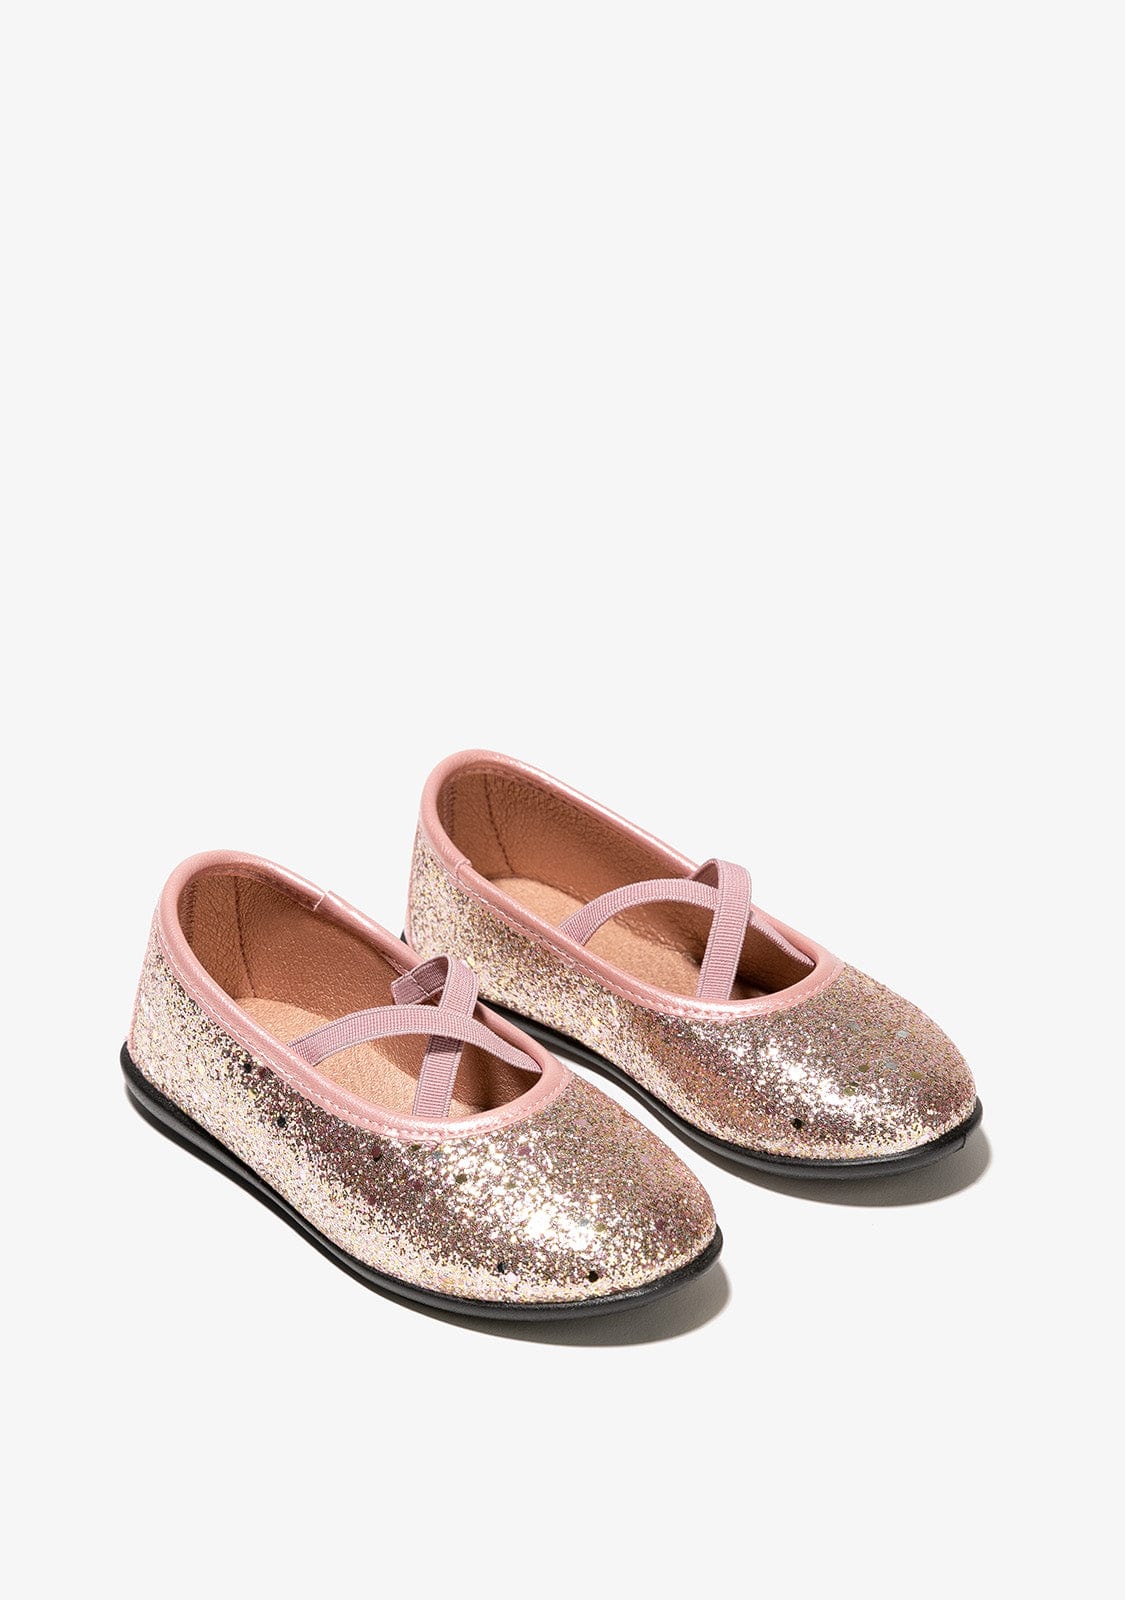 CONGUITOS Shoes Girl's Pink Glitter Straps Ballerinas